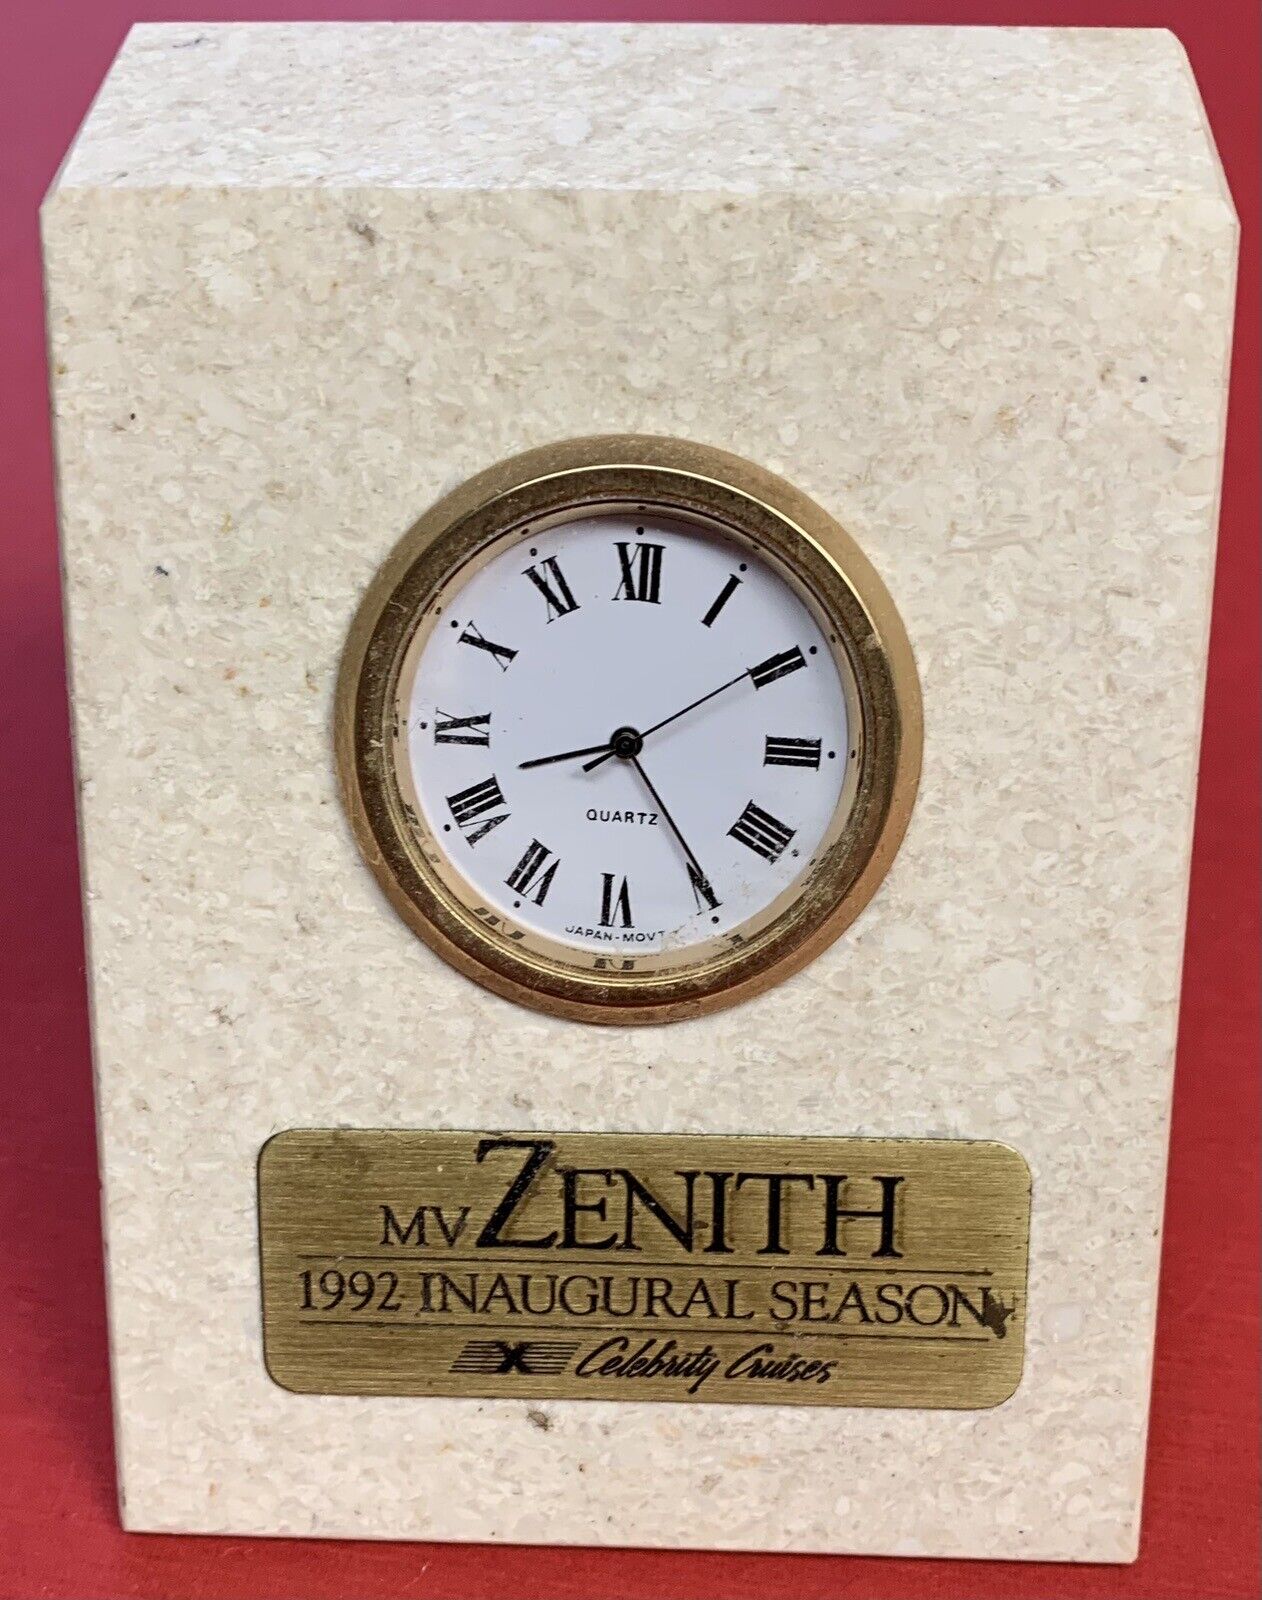 Celebrity Cruises, MV Zenith 1992 Inaugural Season, Clock/Marble Paperweight